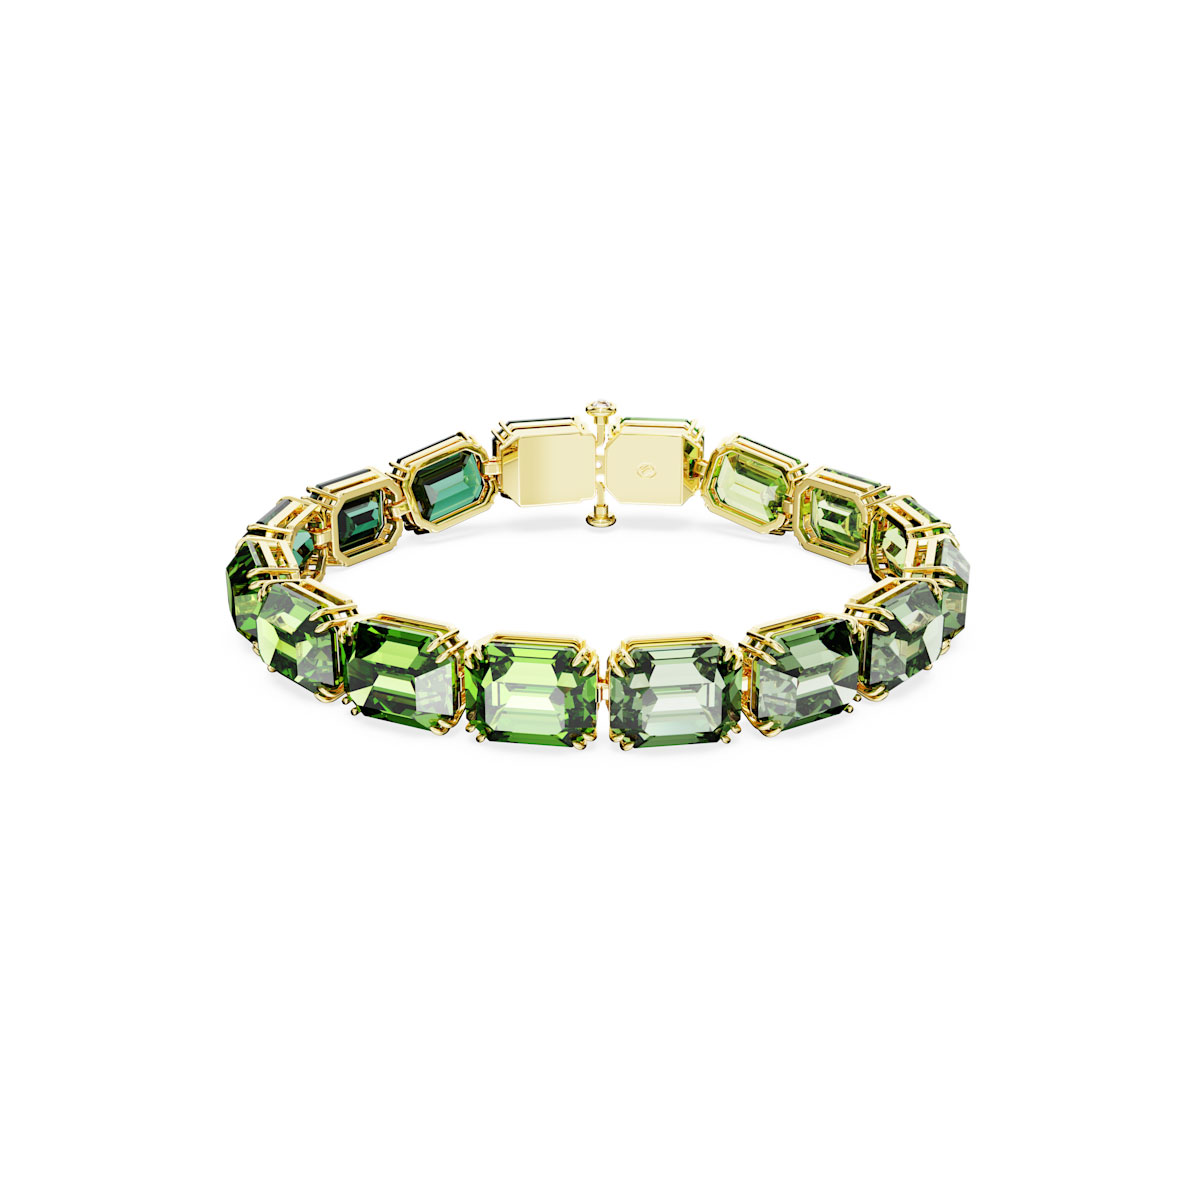 Swarovski Millenia bracelet, Octagon cut, Color gradient, Green, Gold